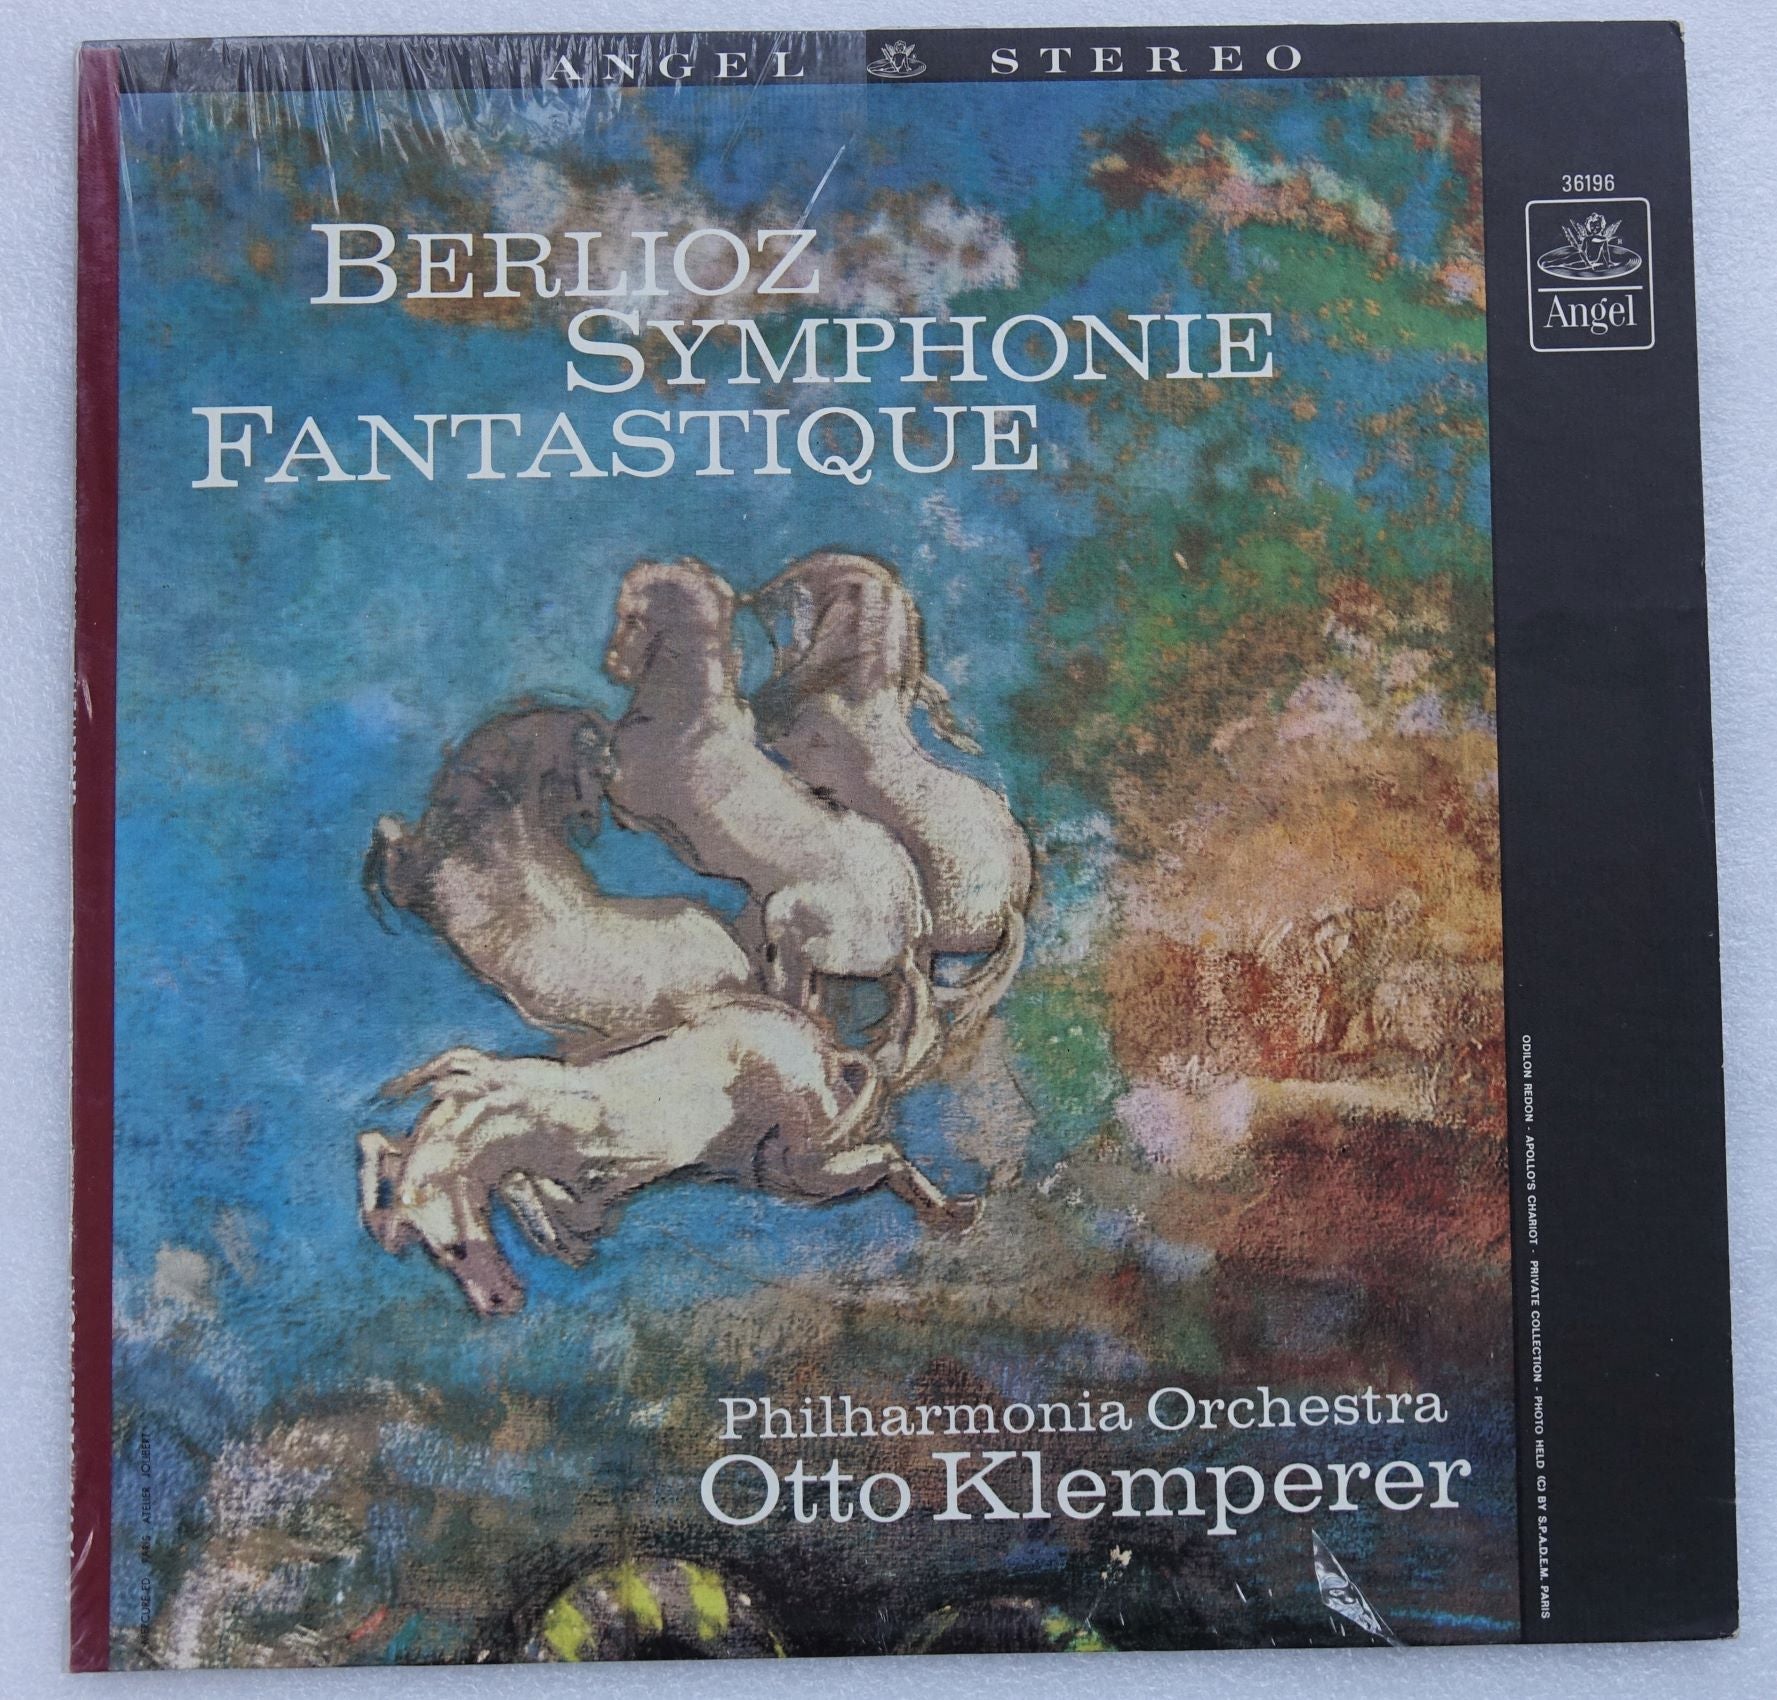 ANG007: Berlioz Symphonie Fantastique